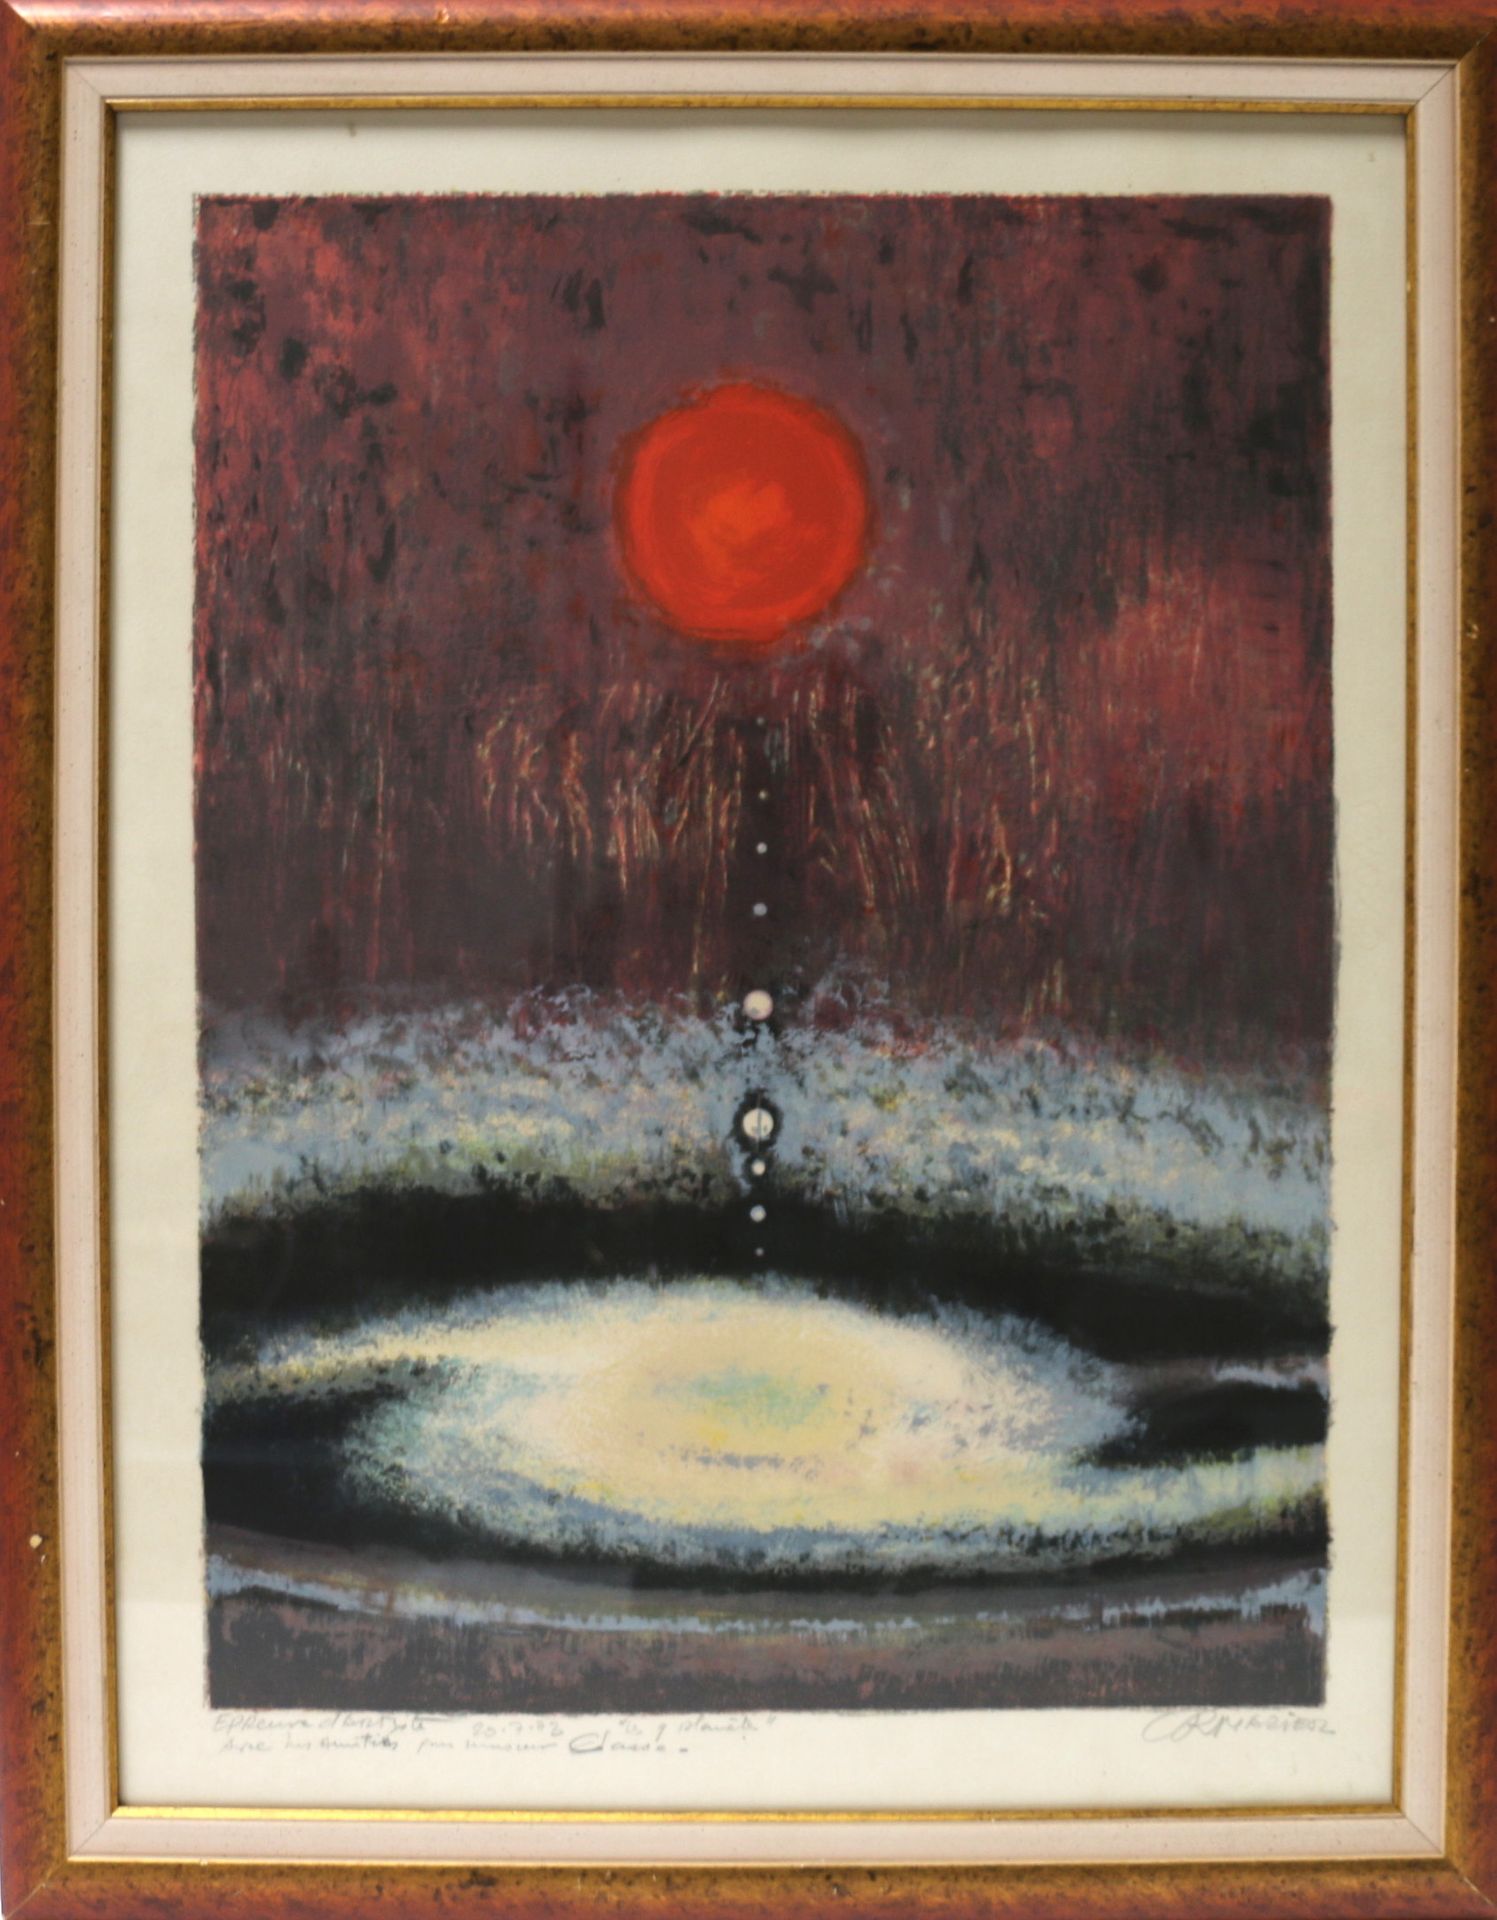 Null "九大行星" 平版印刷，日期为73年7月20日；签名模糊不清 79 x 59 cm